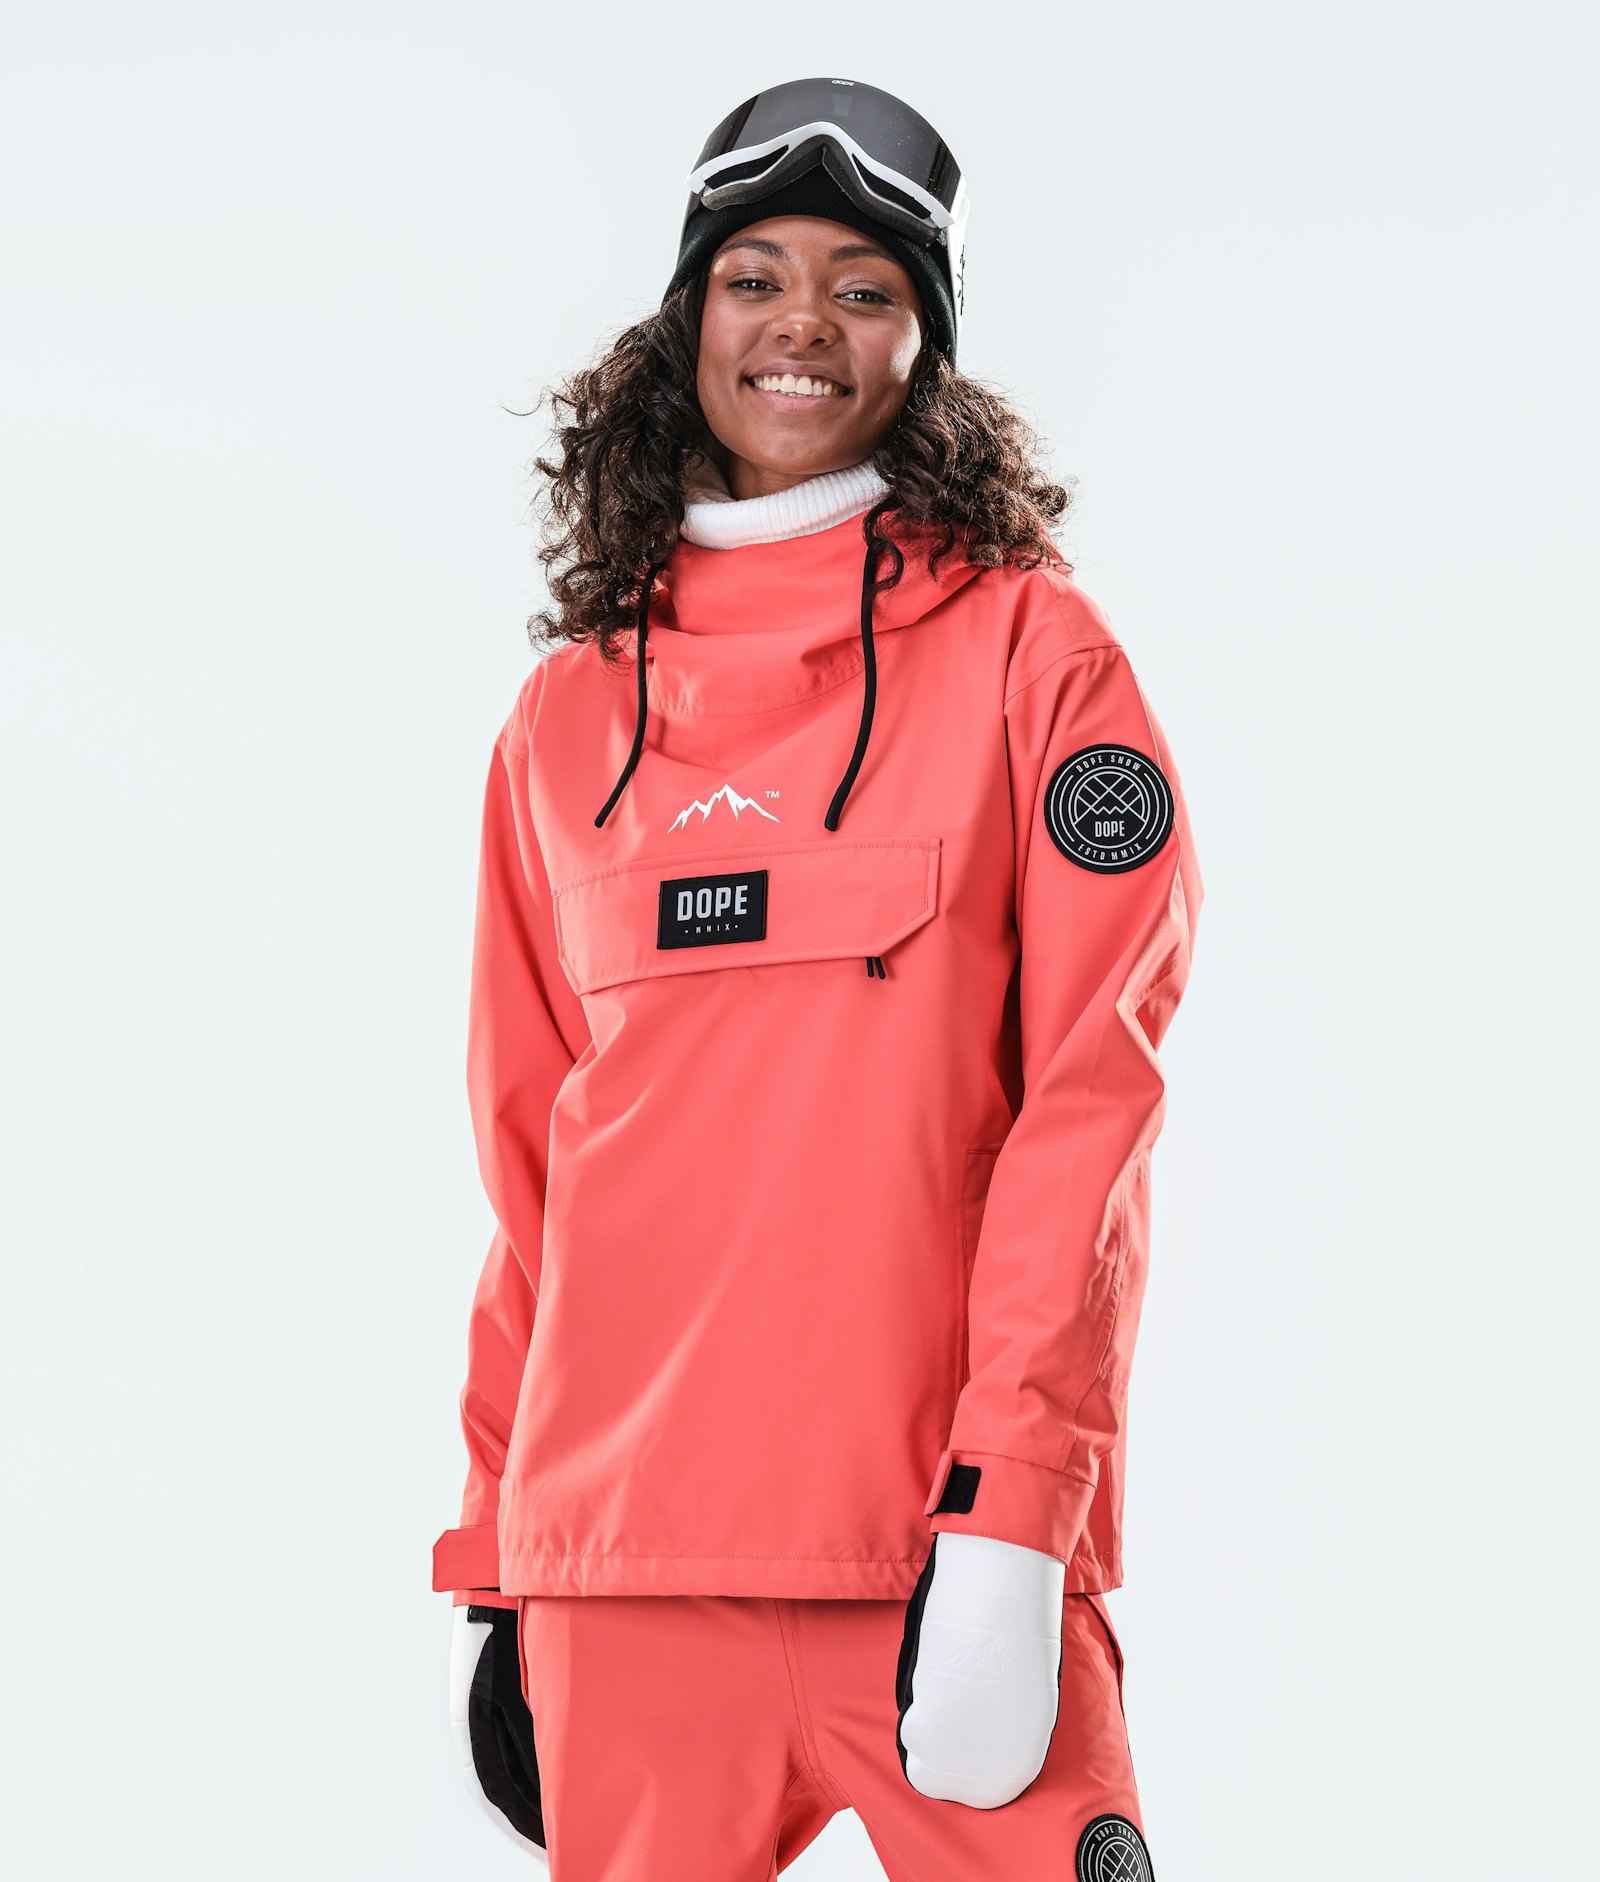 Blizzard W 2020 Ski Jacket Women Coral